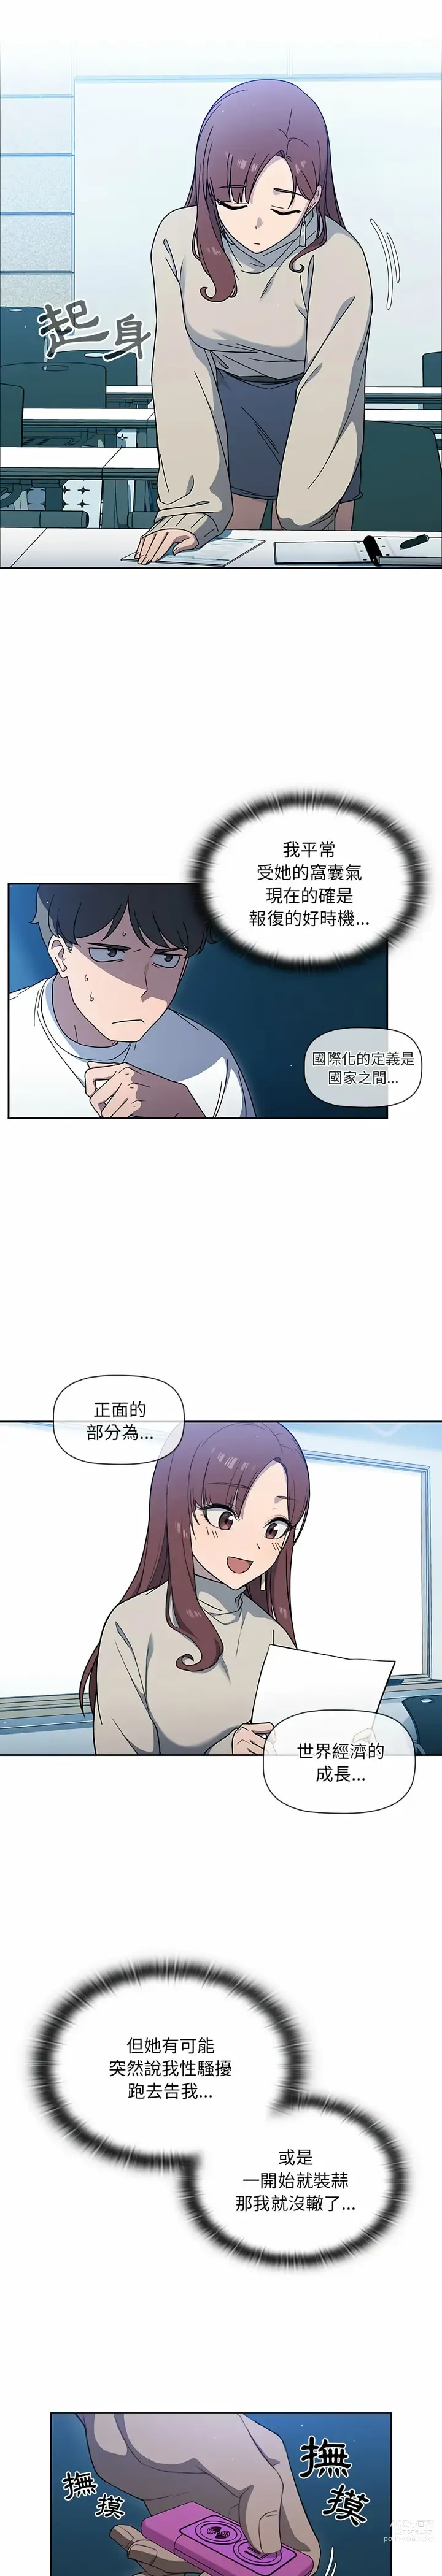 Page 23 of manga 調教開關 1-56 第一季 END